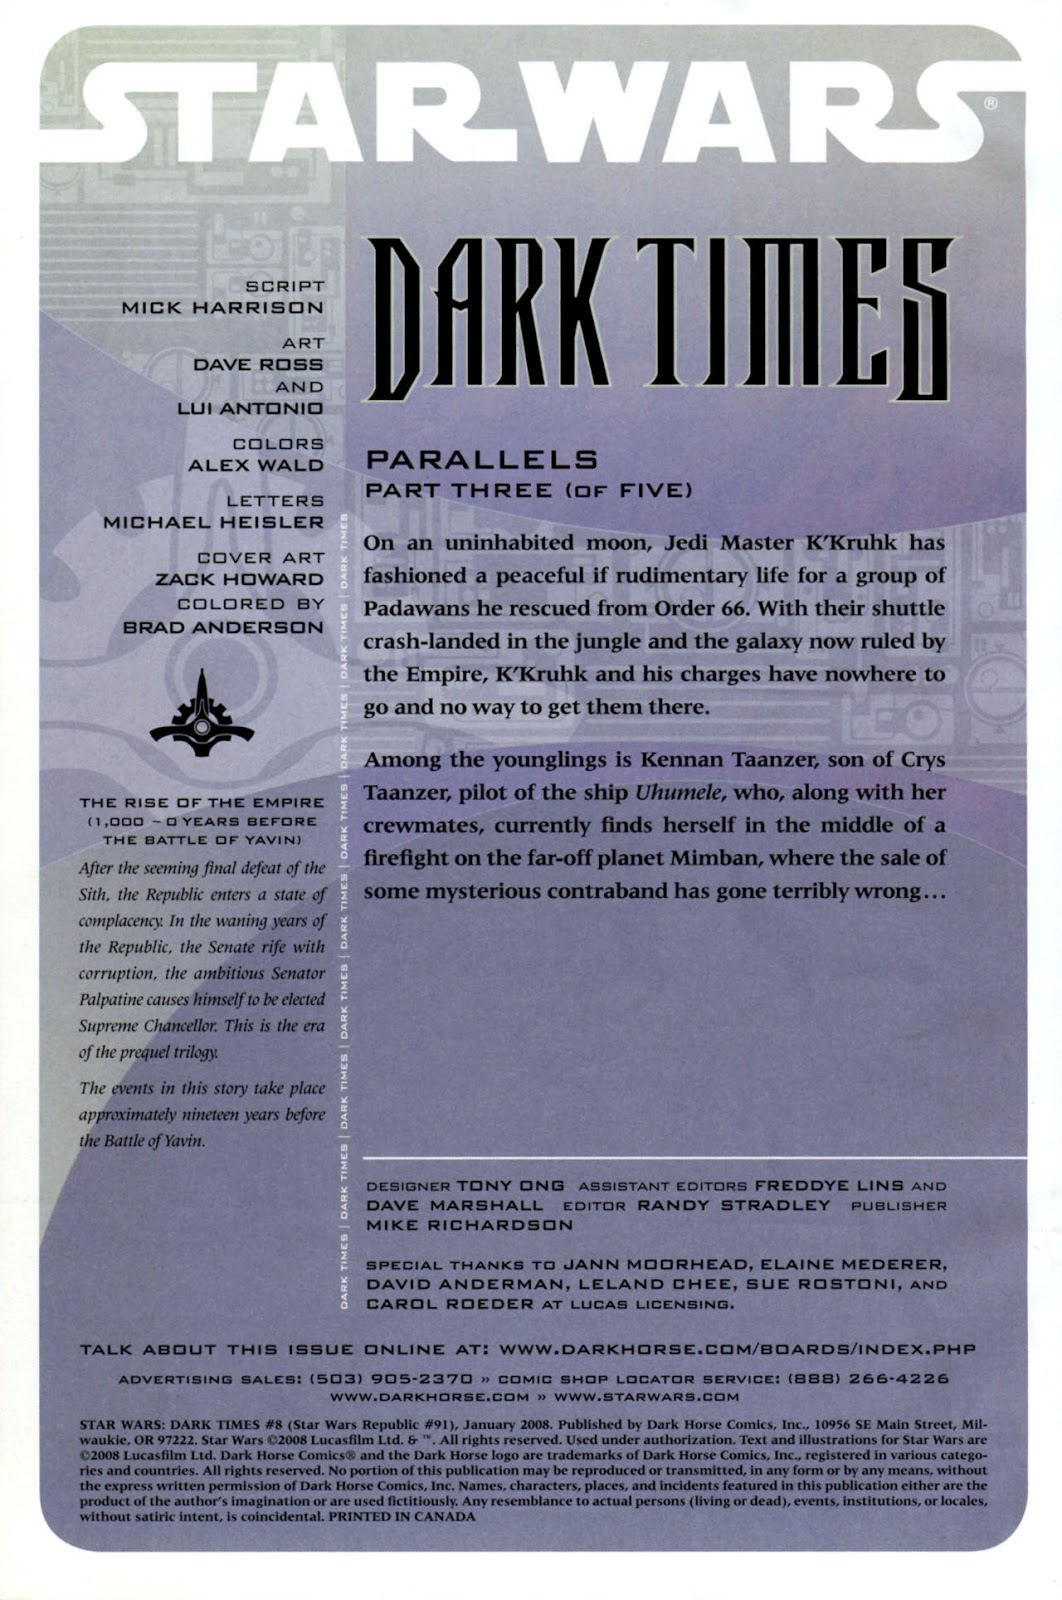 Star Wars: Dark Times issue 8 - Parallels, Part 3 - Page 2